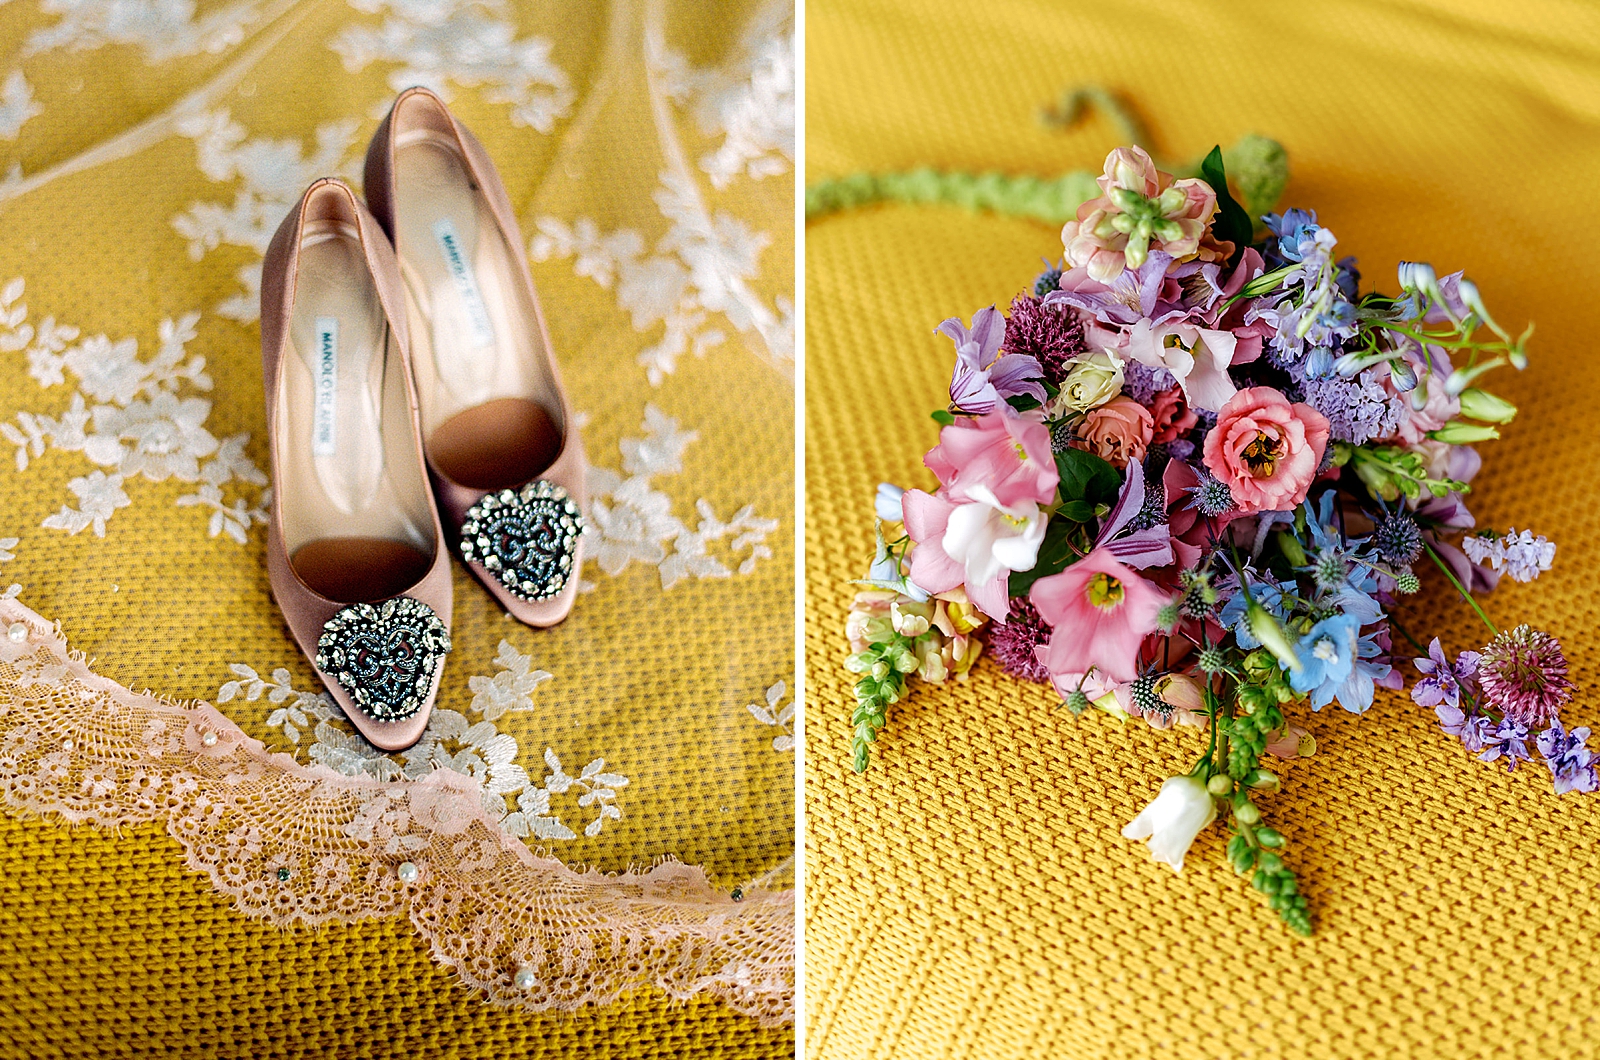 Left photo: Up close shot of the bride's shoes.
Right photo: Up close shot of the bride's bouquet. 